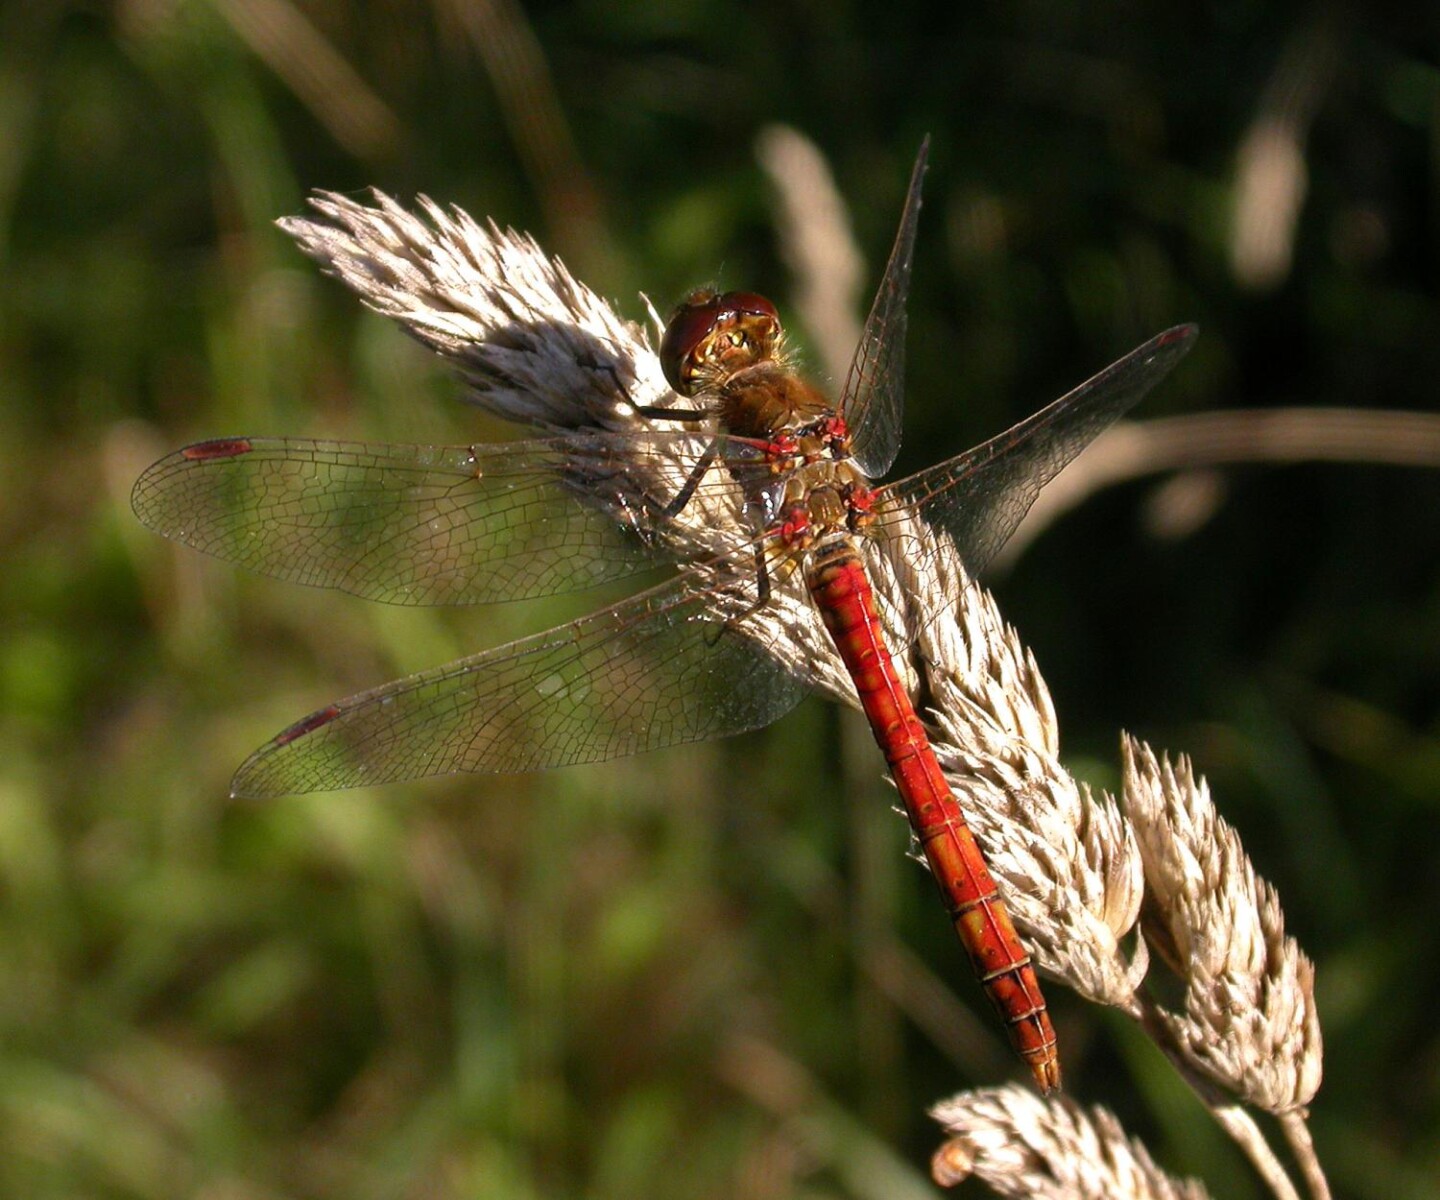 british-dragonflies.org.uk